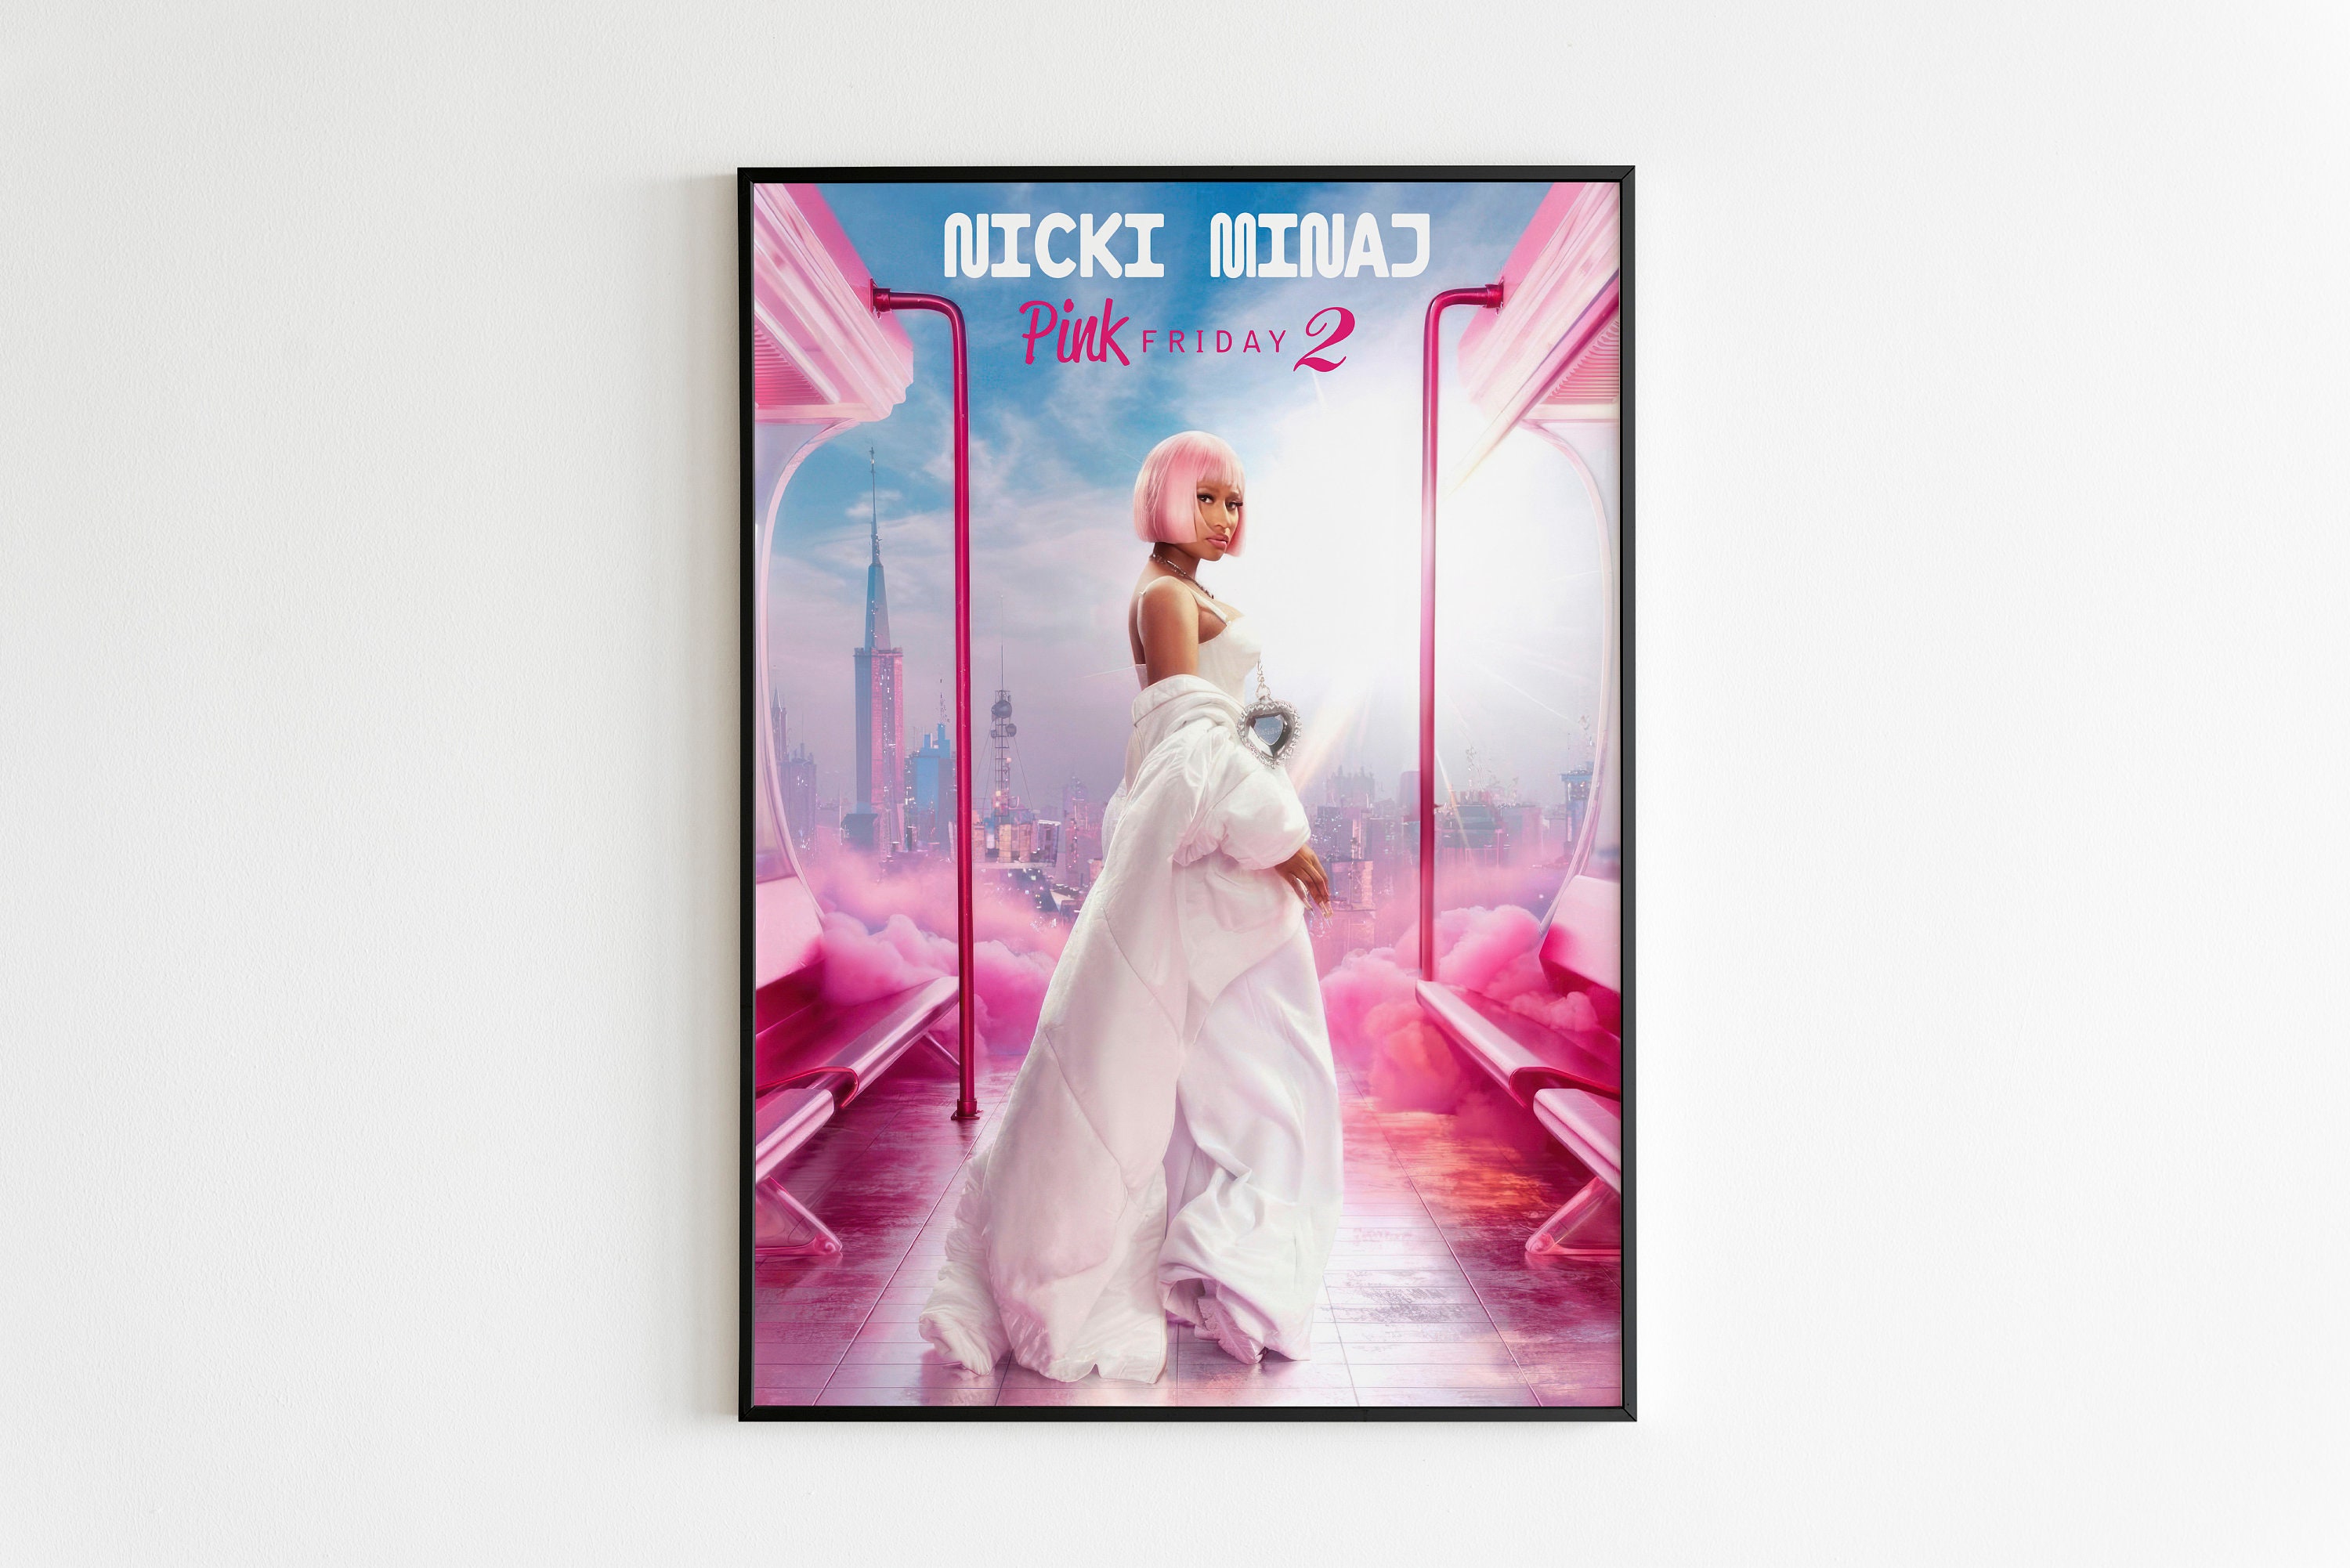 Nicki Minaj Pink Friday 2 Album cover poster, Nicki Minaj Pink Friday 2